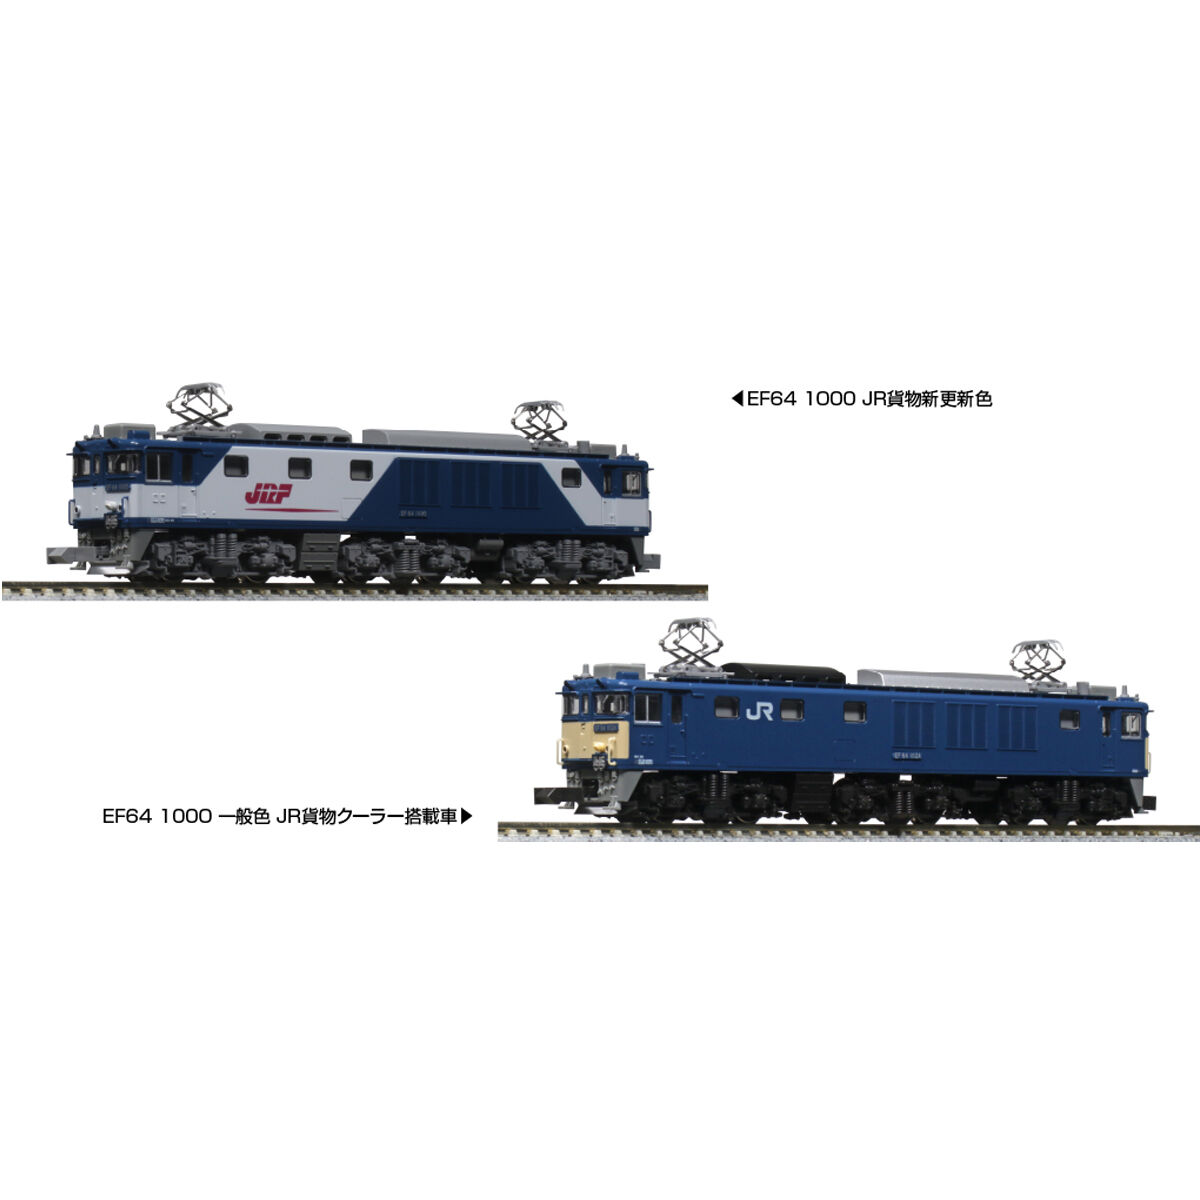 KATO 3024-2 EF64 1000 JR貨物新更新色 | ウエサカ模型店